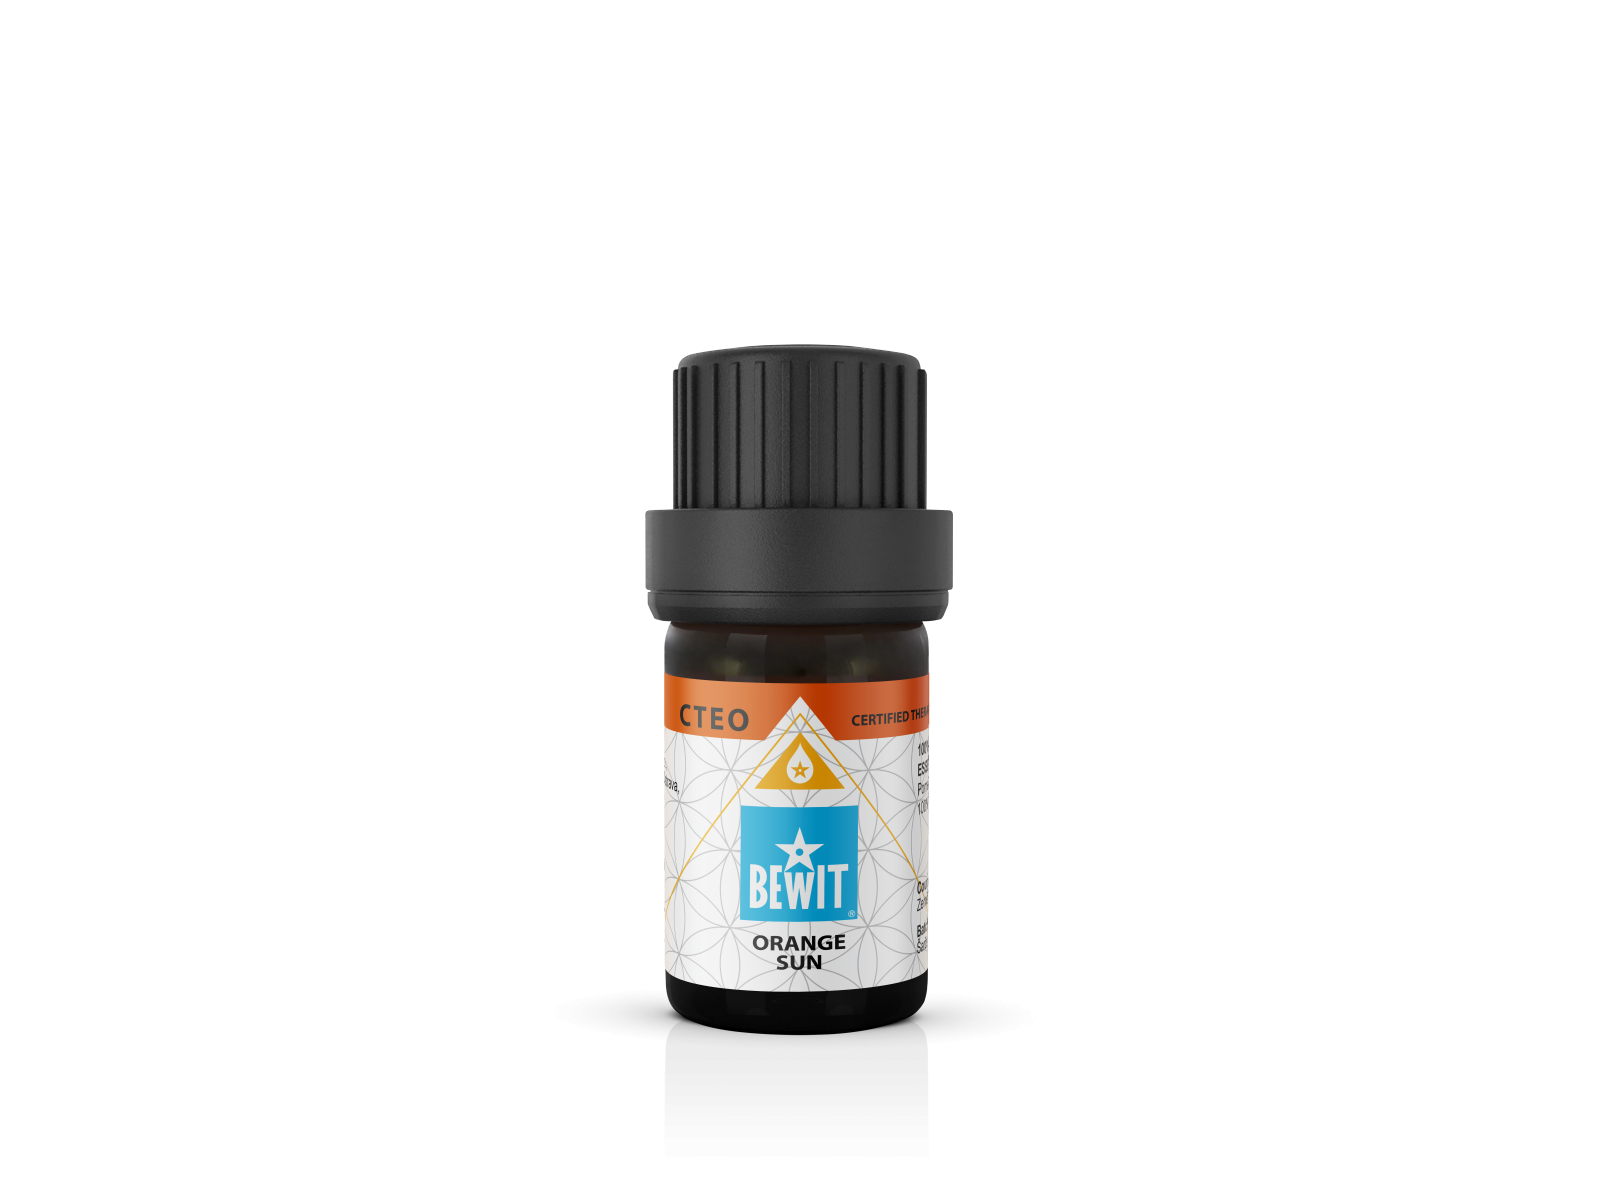 BEWIT Orange SUN - 100% pure and natural CTEO® essential oil - 4